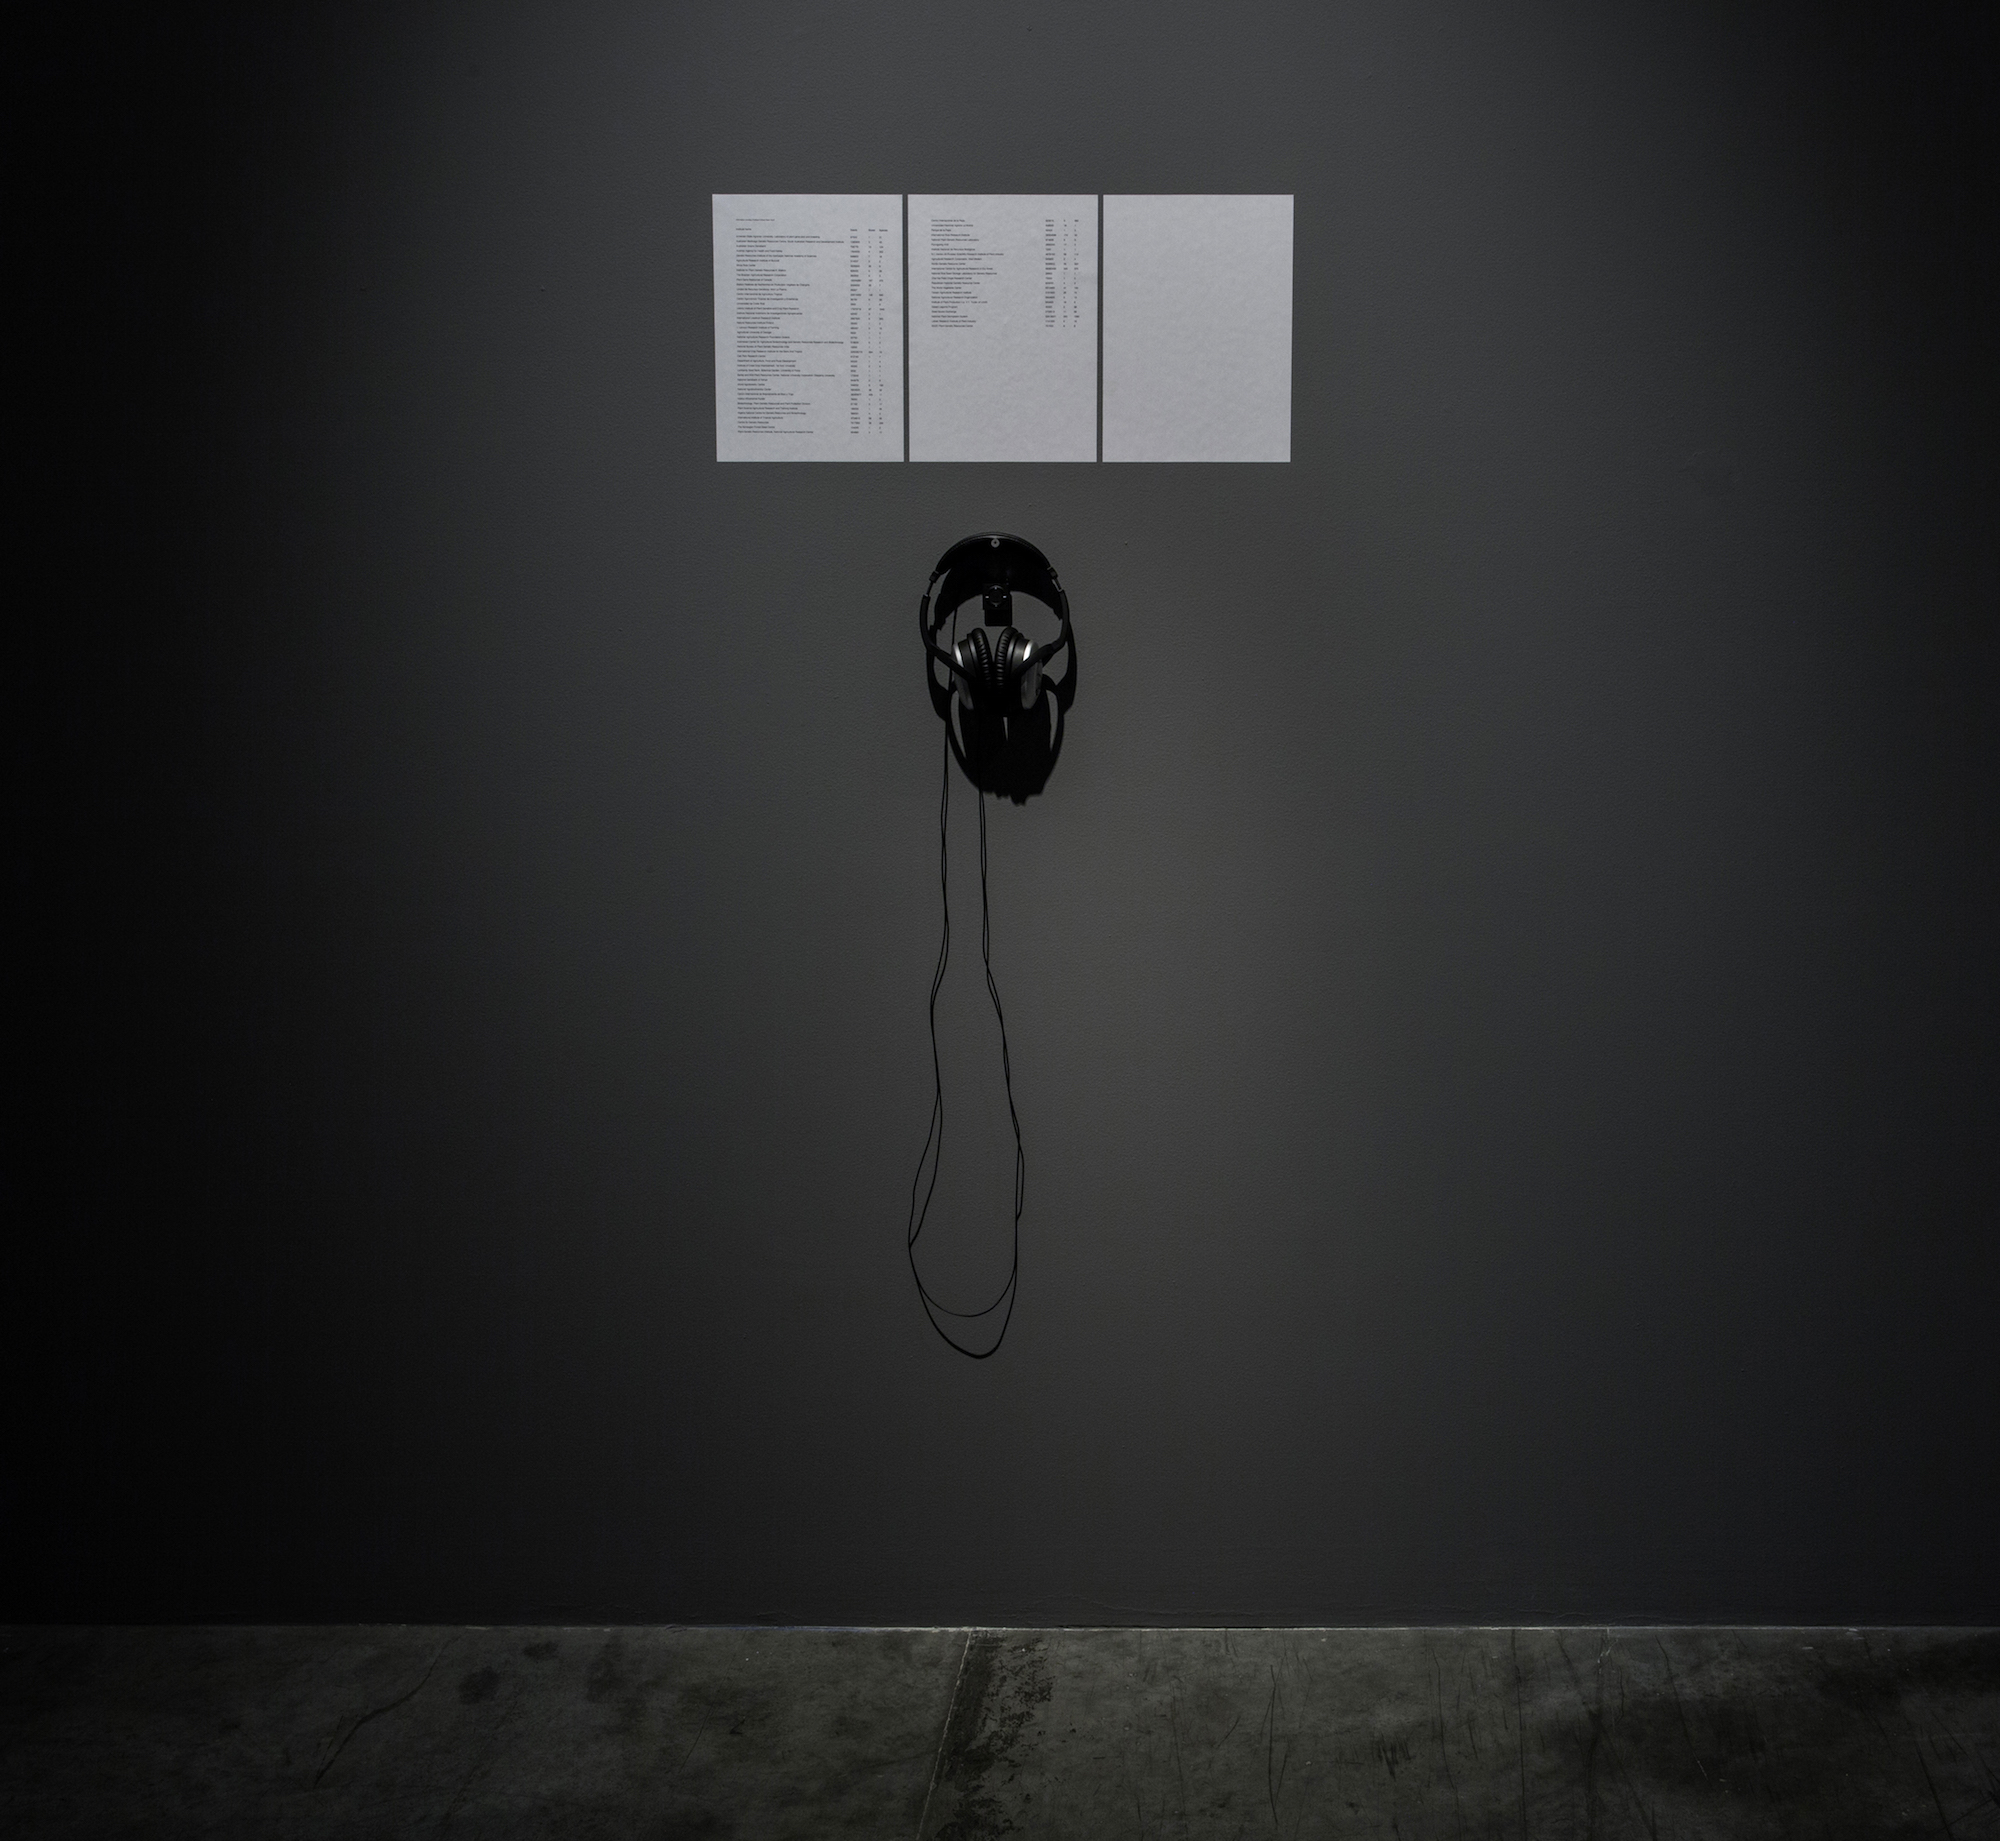  Michael John Whelan   Chamber 2016 Single channel sound (00:21:36), noise canceling headphones, digital audio player, 3 paper sheets (21 x 29.7 cm each) Edition of 3 + 2 AP 